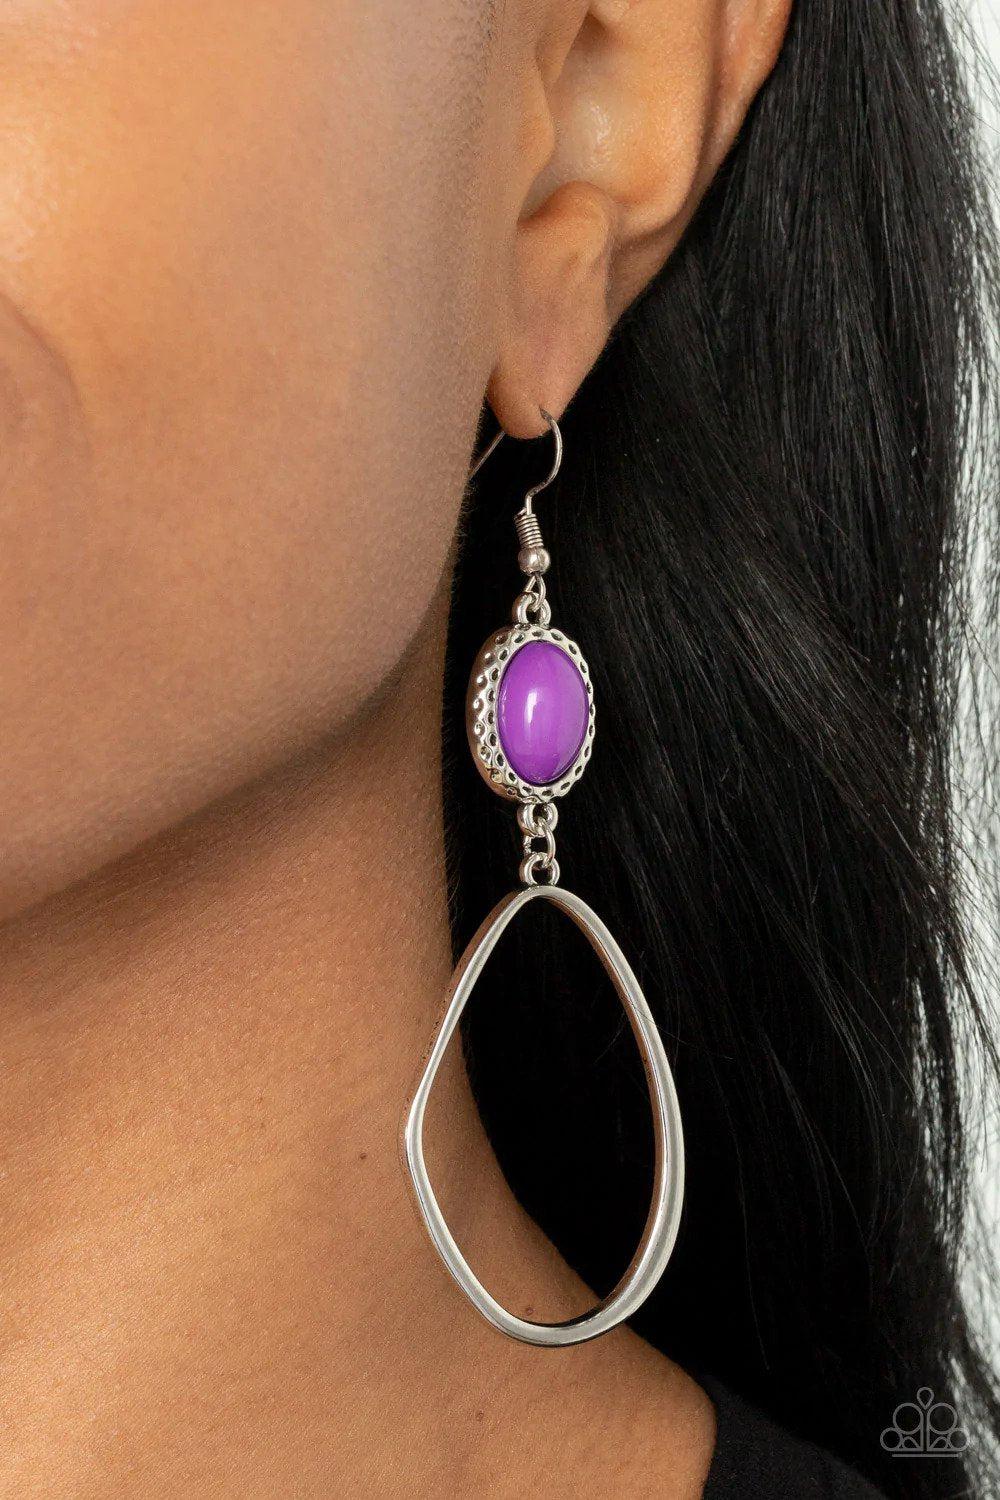 Adventurous Allure Purple Earrings - Paparazzi Accessories- on model - CarasShop.com - $5 Jewelry by Cara Jewels